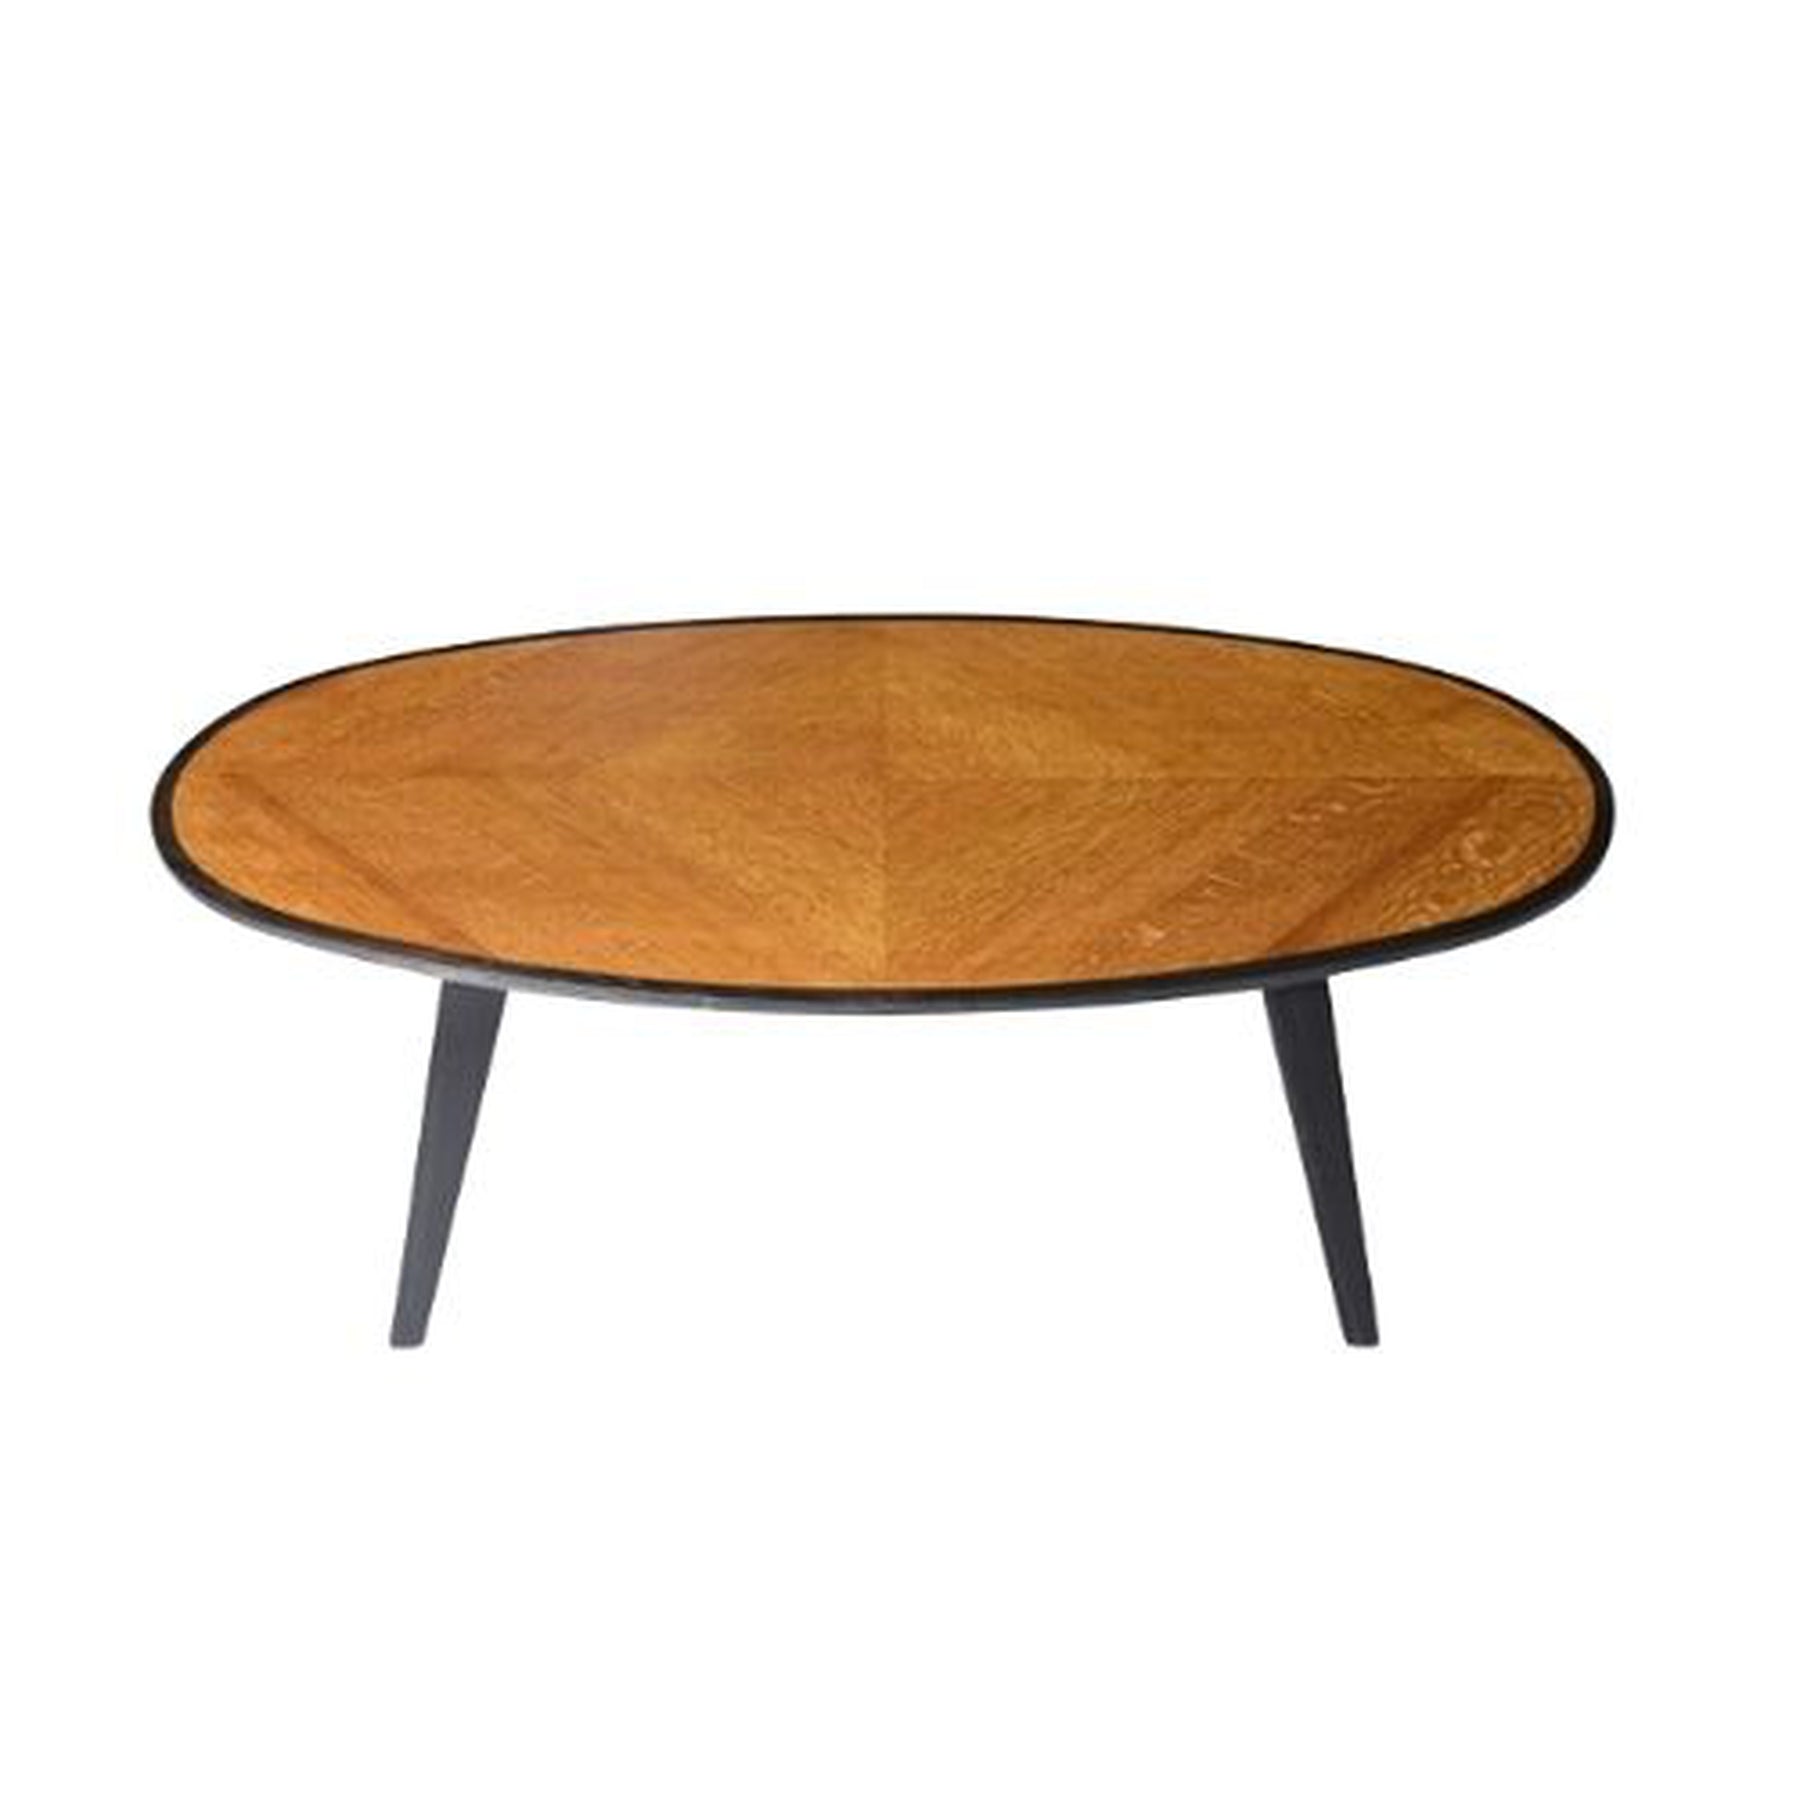 Table basse | Table basse en bois de forme ovale | Table de cocktail ovale en bois de style industriel